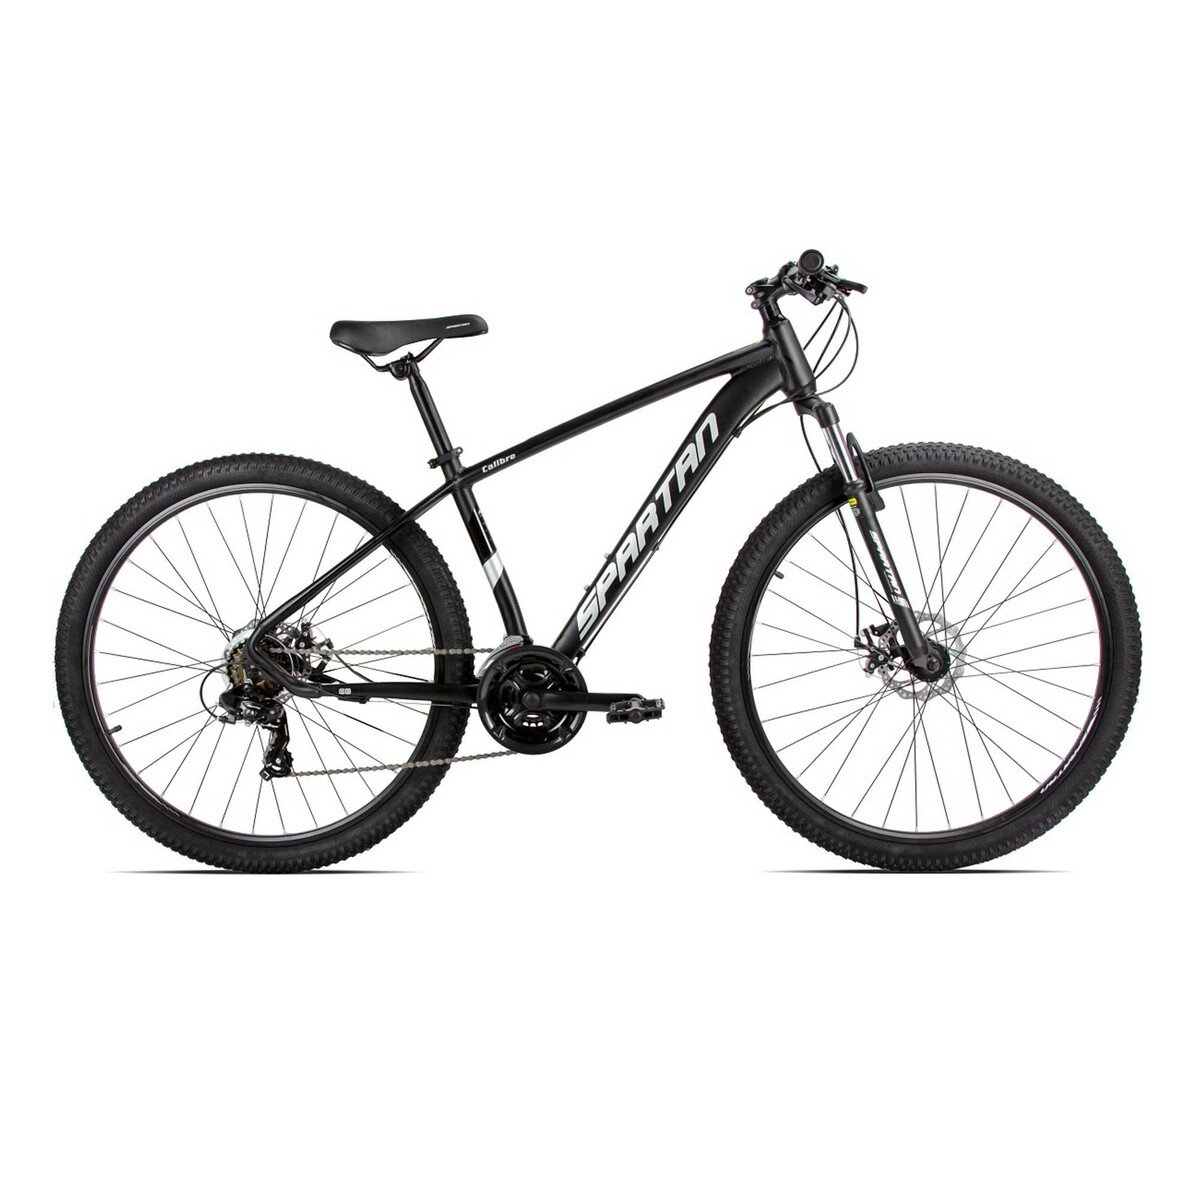 Spartan Bicycle 29" Calibre Hardtail MTB - Charcoal Black SP-3181